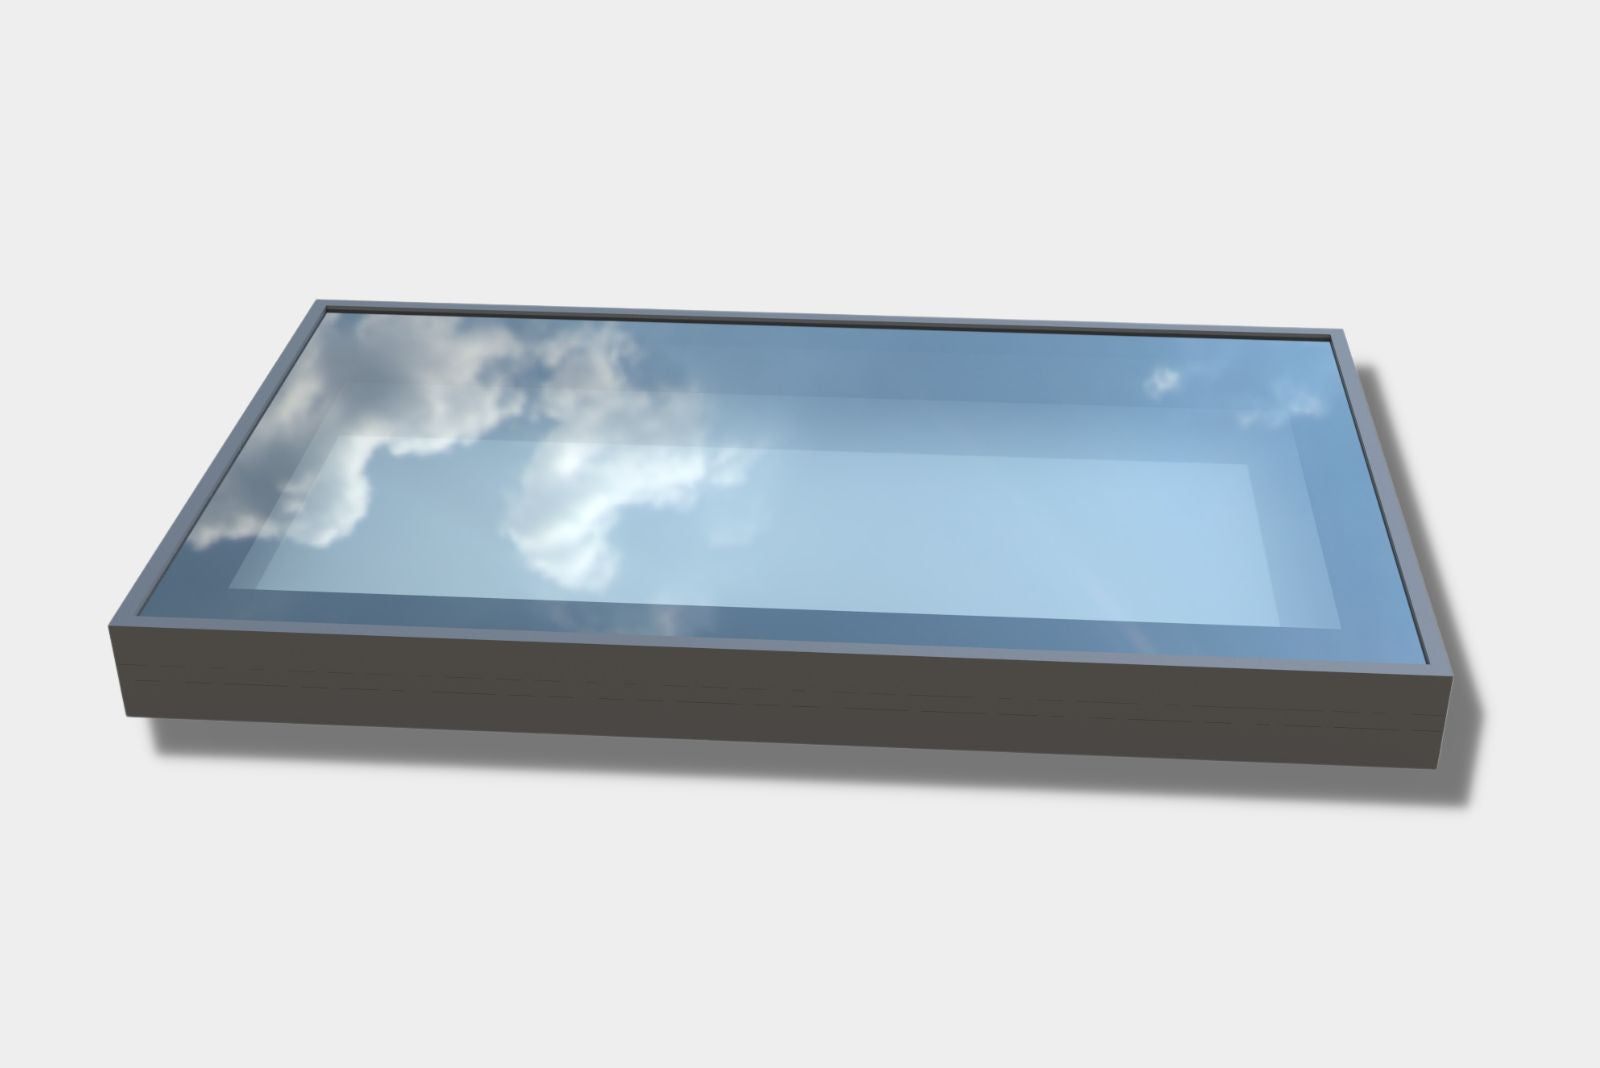 Framed Skylight 600 x 1200 mm – Triple glazed